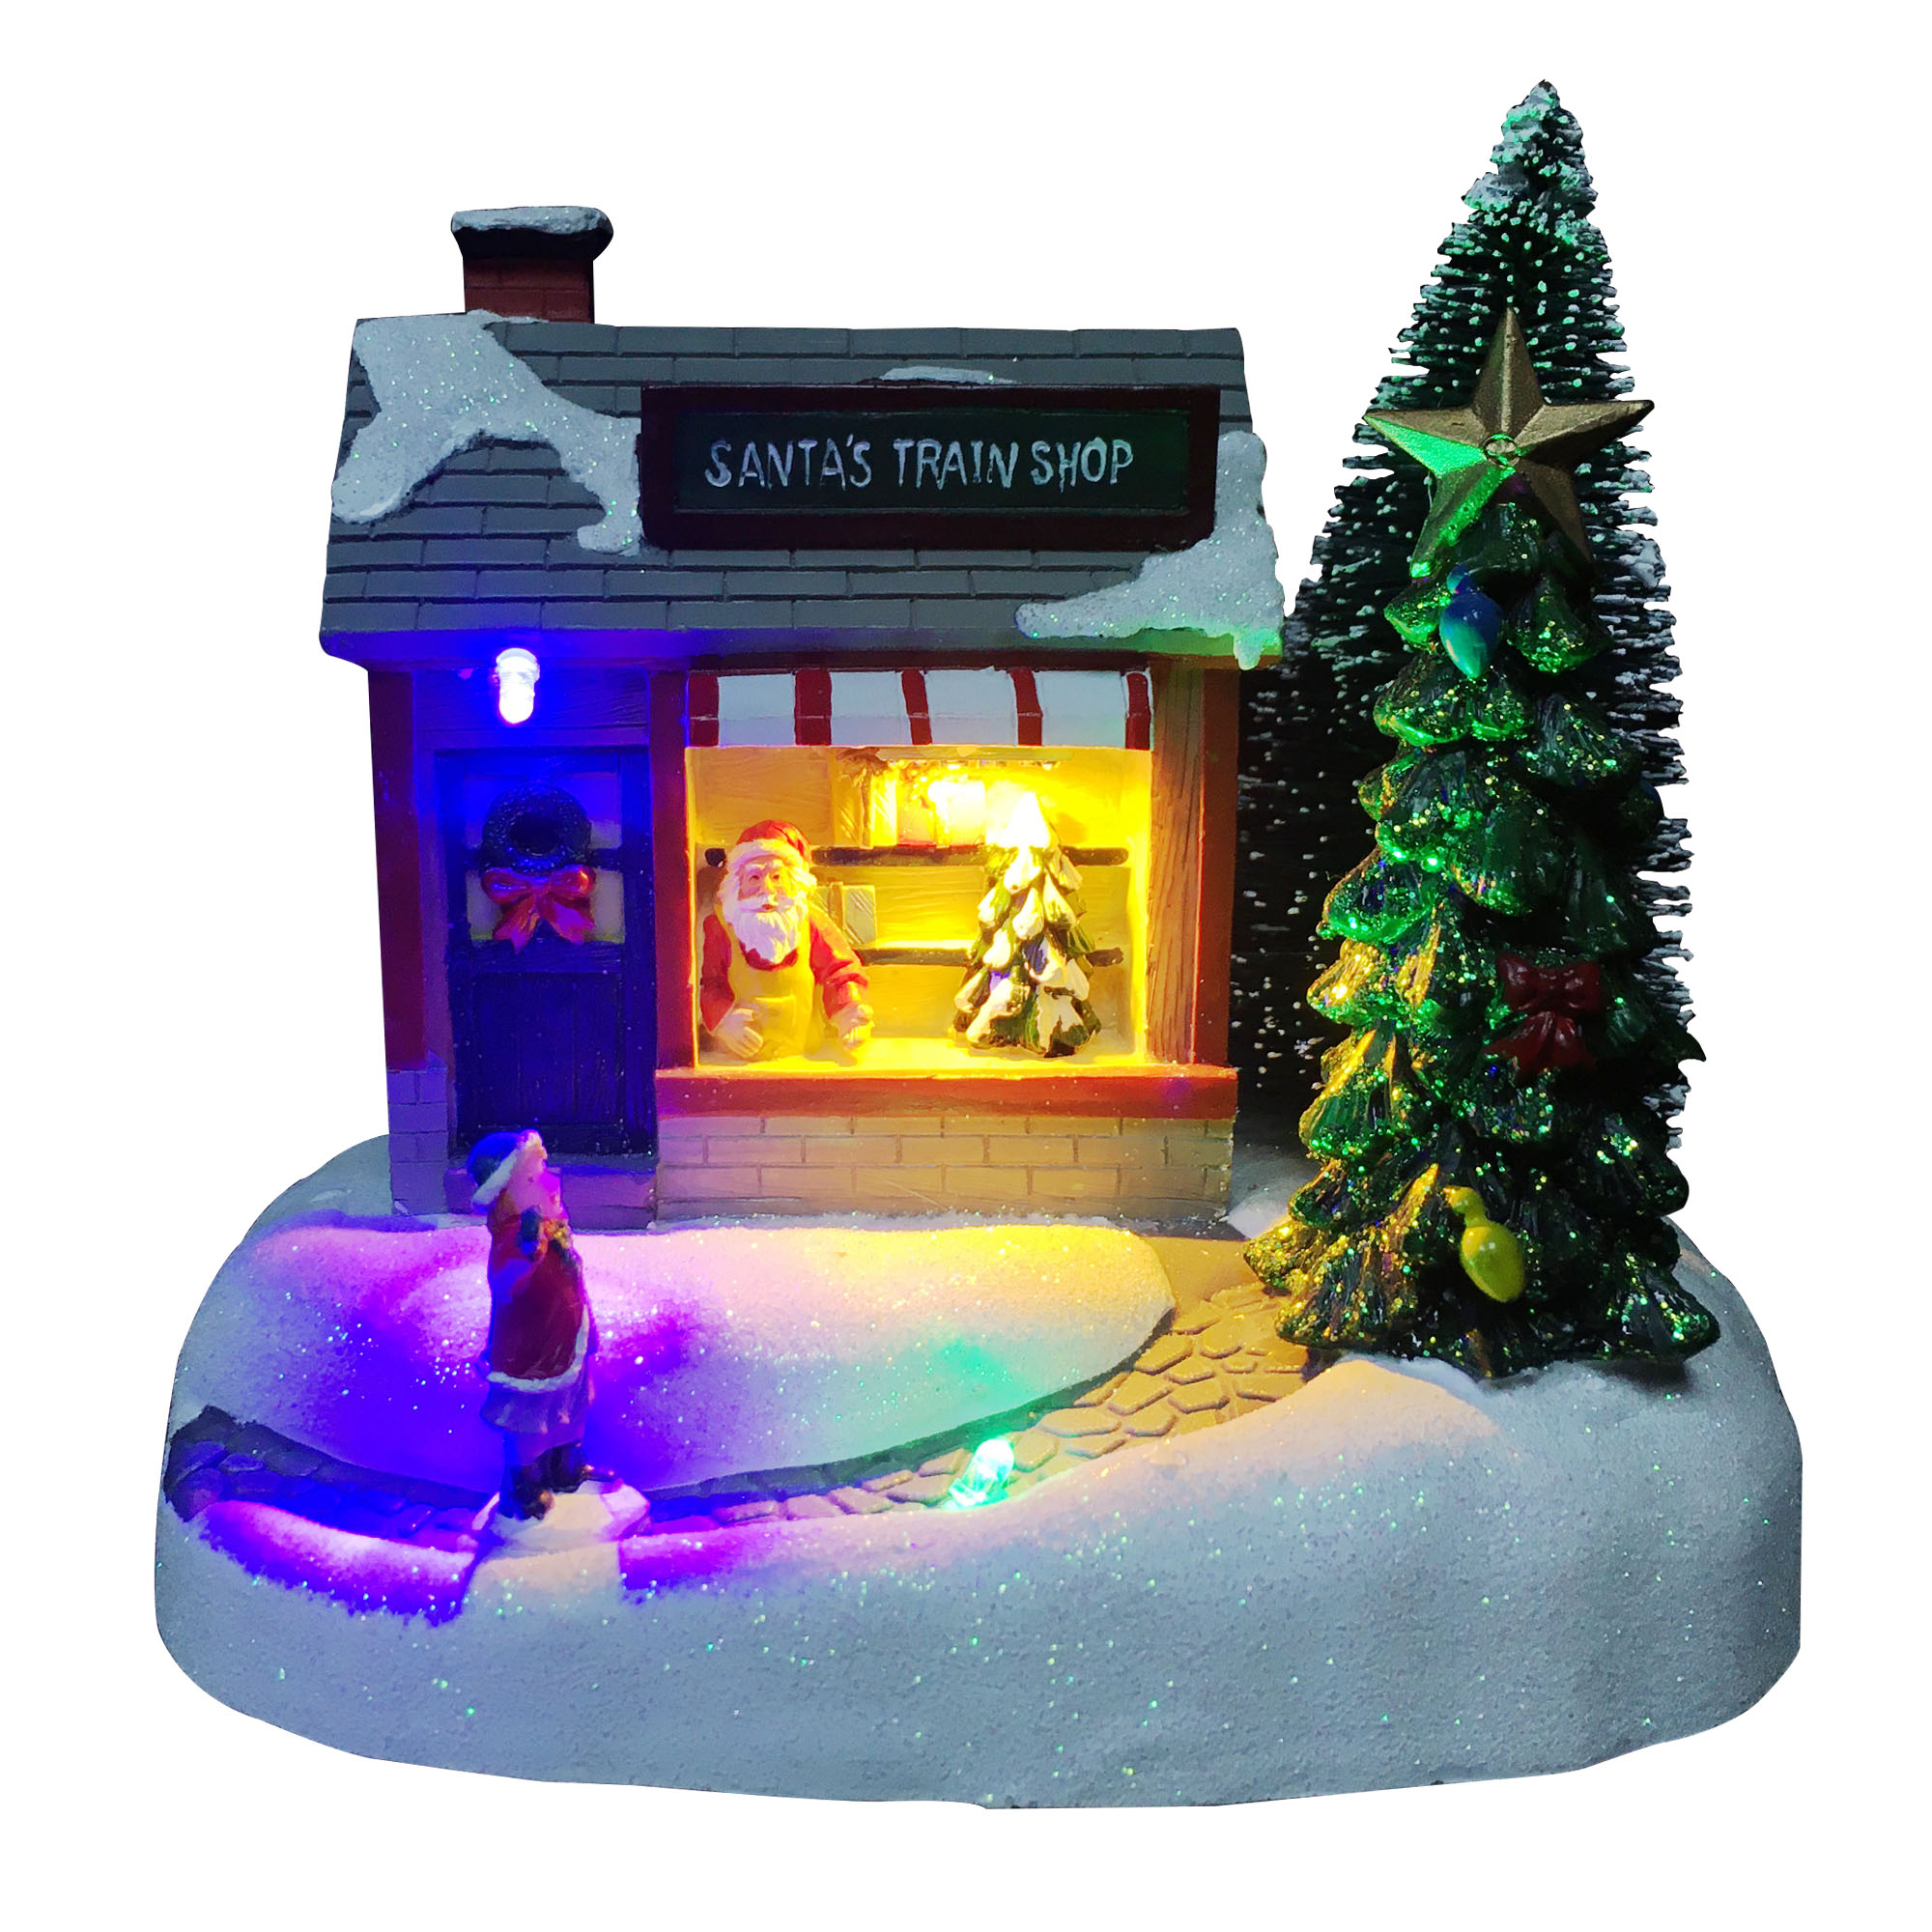 2018 wholesale price Christmas Village Starter Set - Melody colorful Xmas village Christmas Decoration Santa’s Train Shop scene led lighted Christmas house – Melody